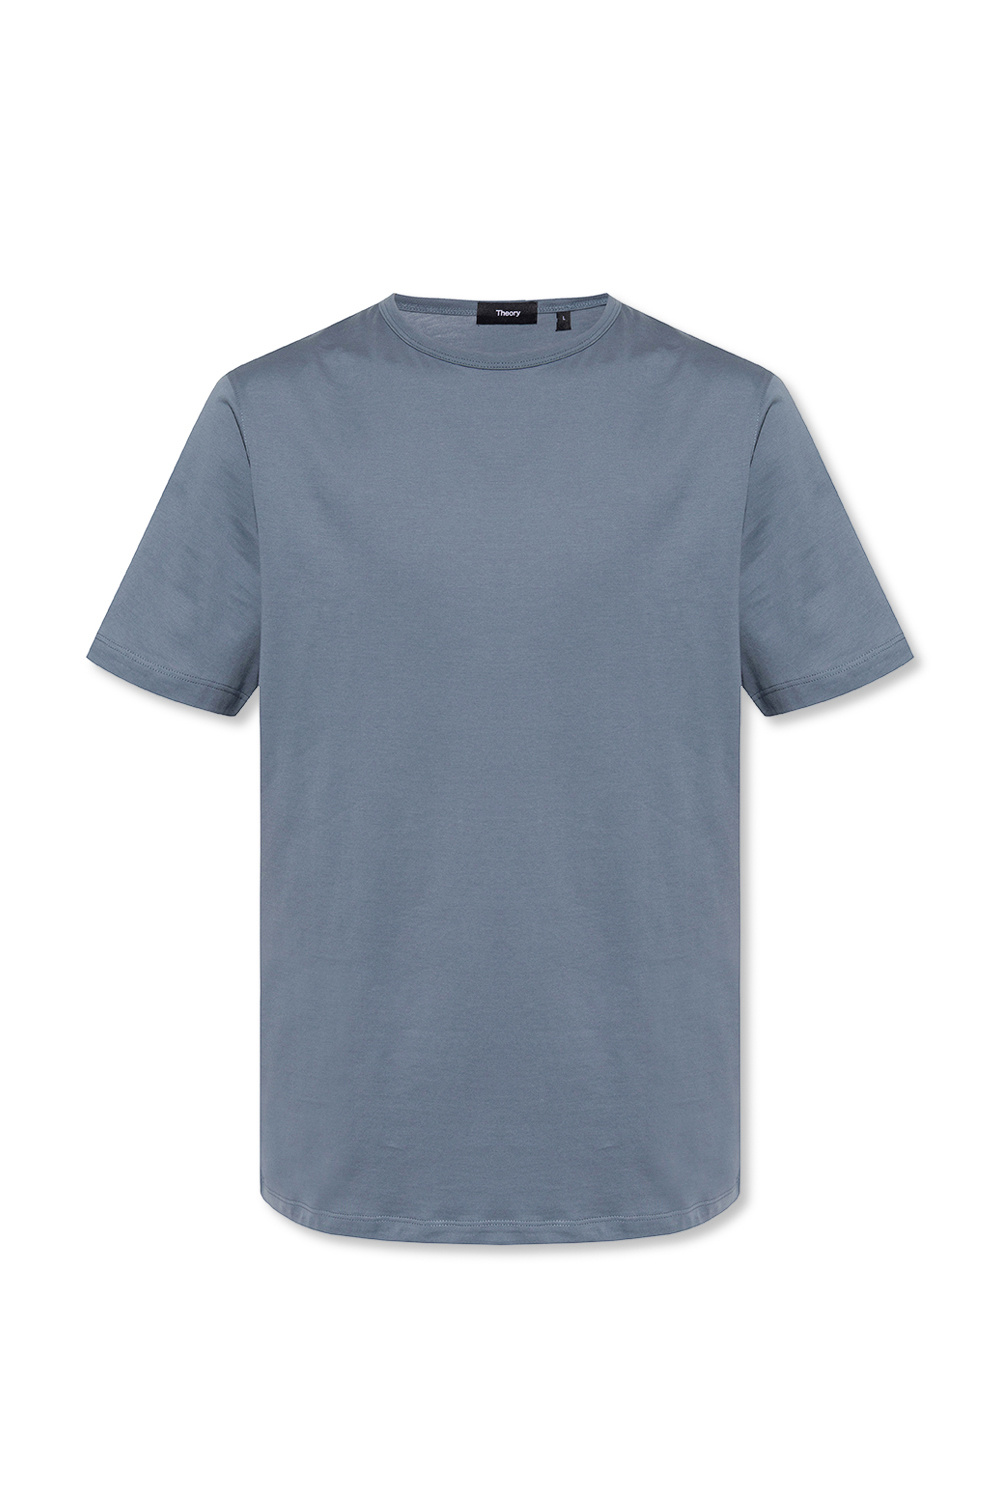 alexandre vauthier long line style shirt item - shirt Theory -  CamaragrancanariaShops Iraq - Grey Crewneck T